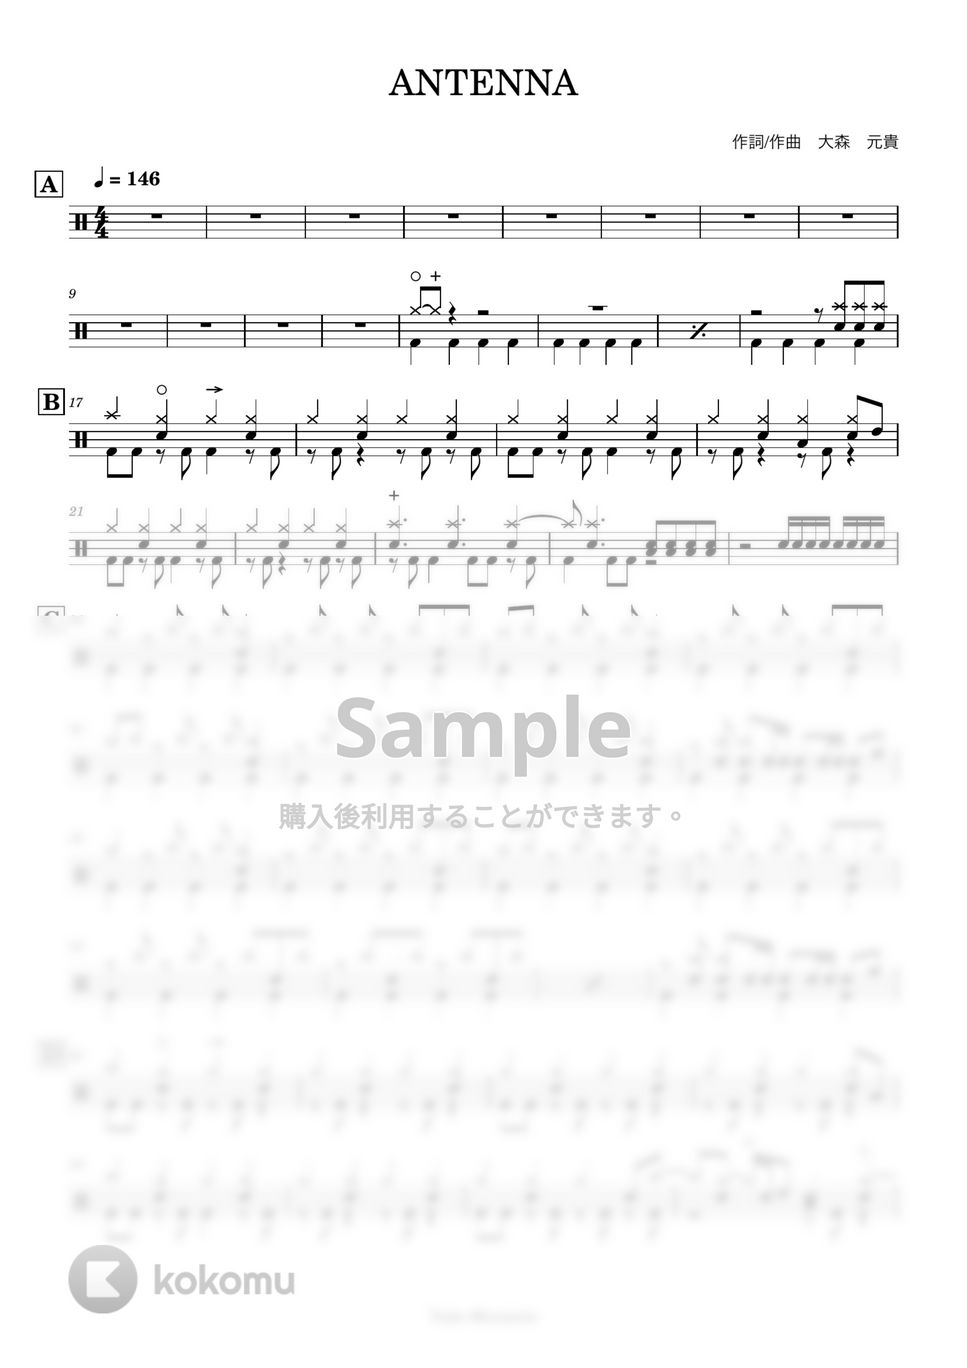 Mrs. GREEN APPLE - 【ドラム譜】ANTENNA【完コピ】 (参考動画あり) by Taiki Mizumoto